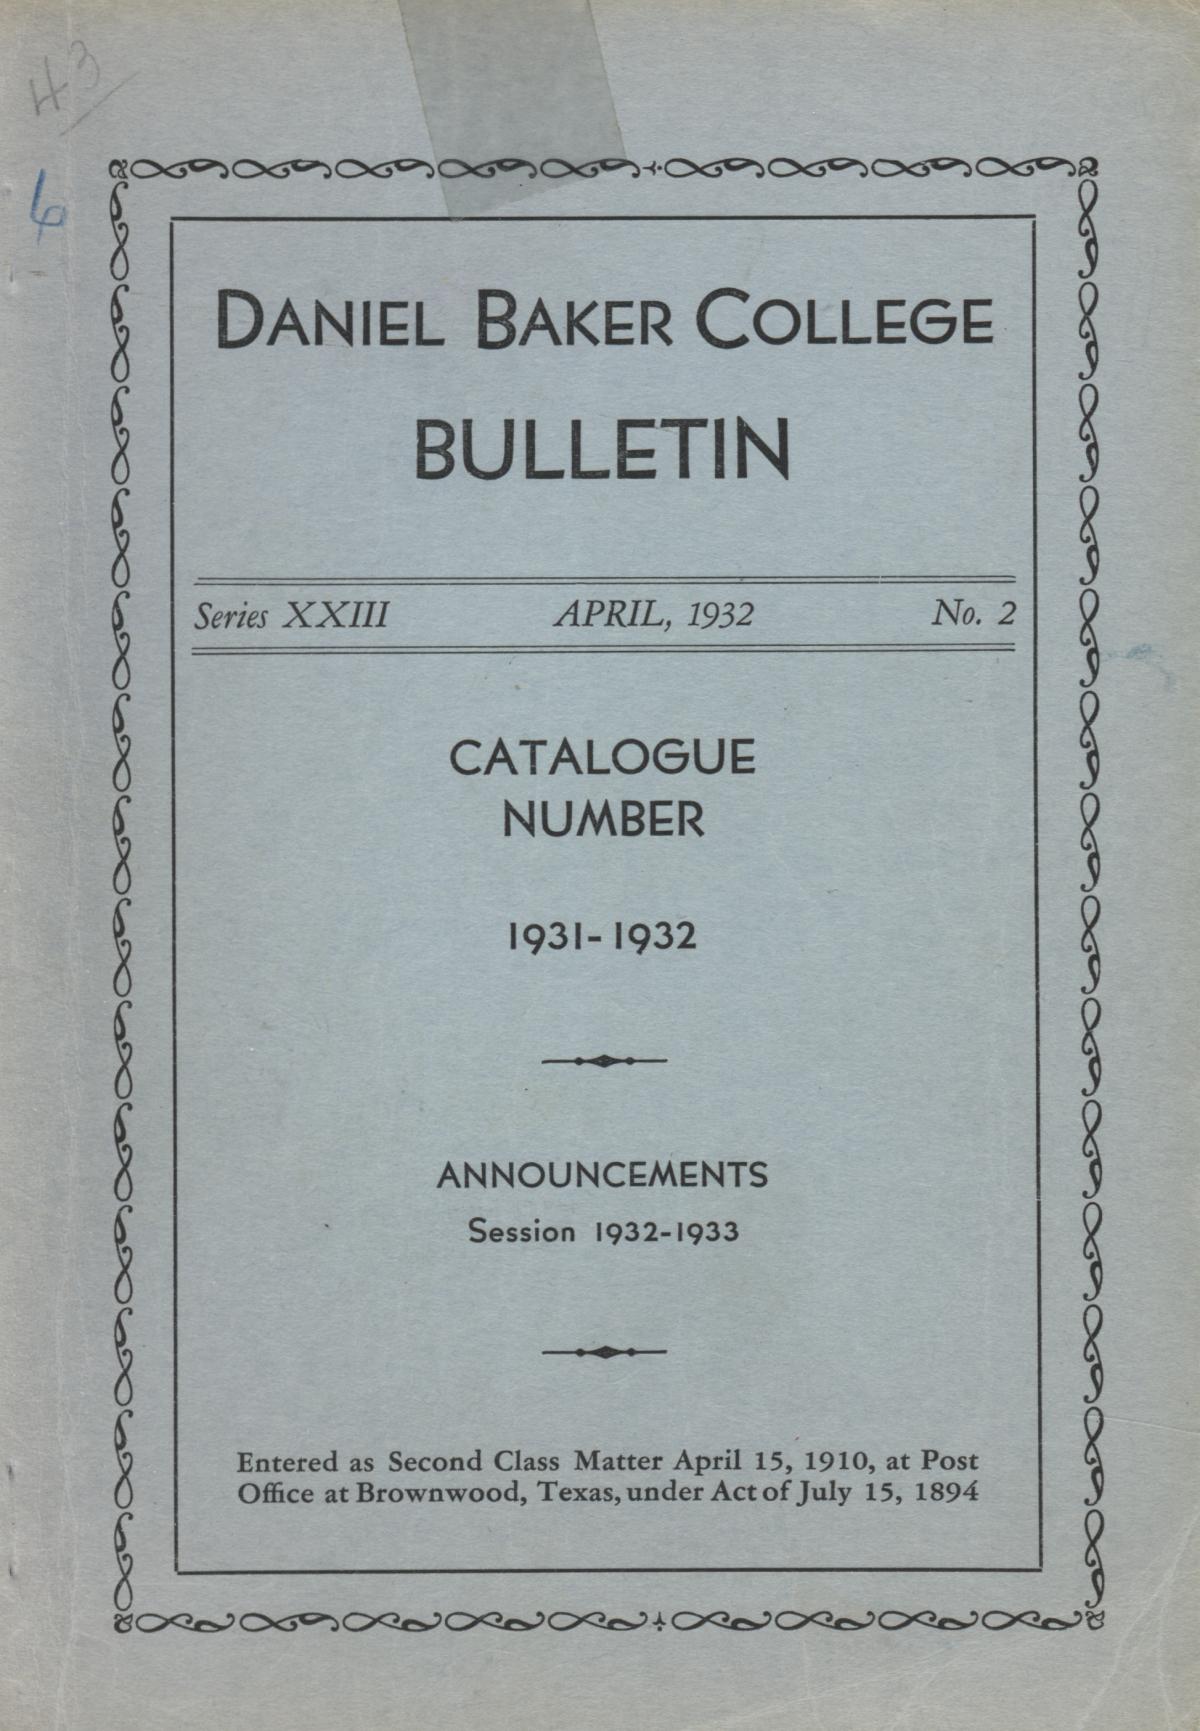 Catalog of Daniel Baker College, 1931-1932
                                                
                                                    Front Cover
                                                